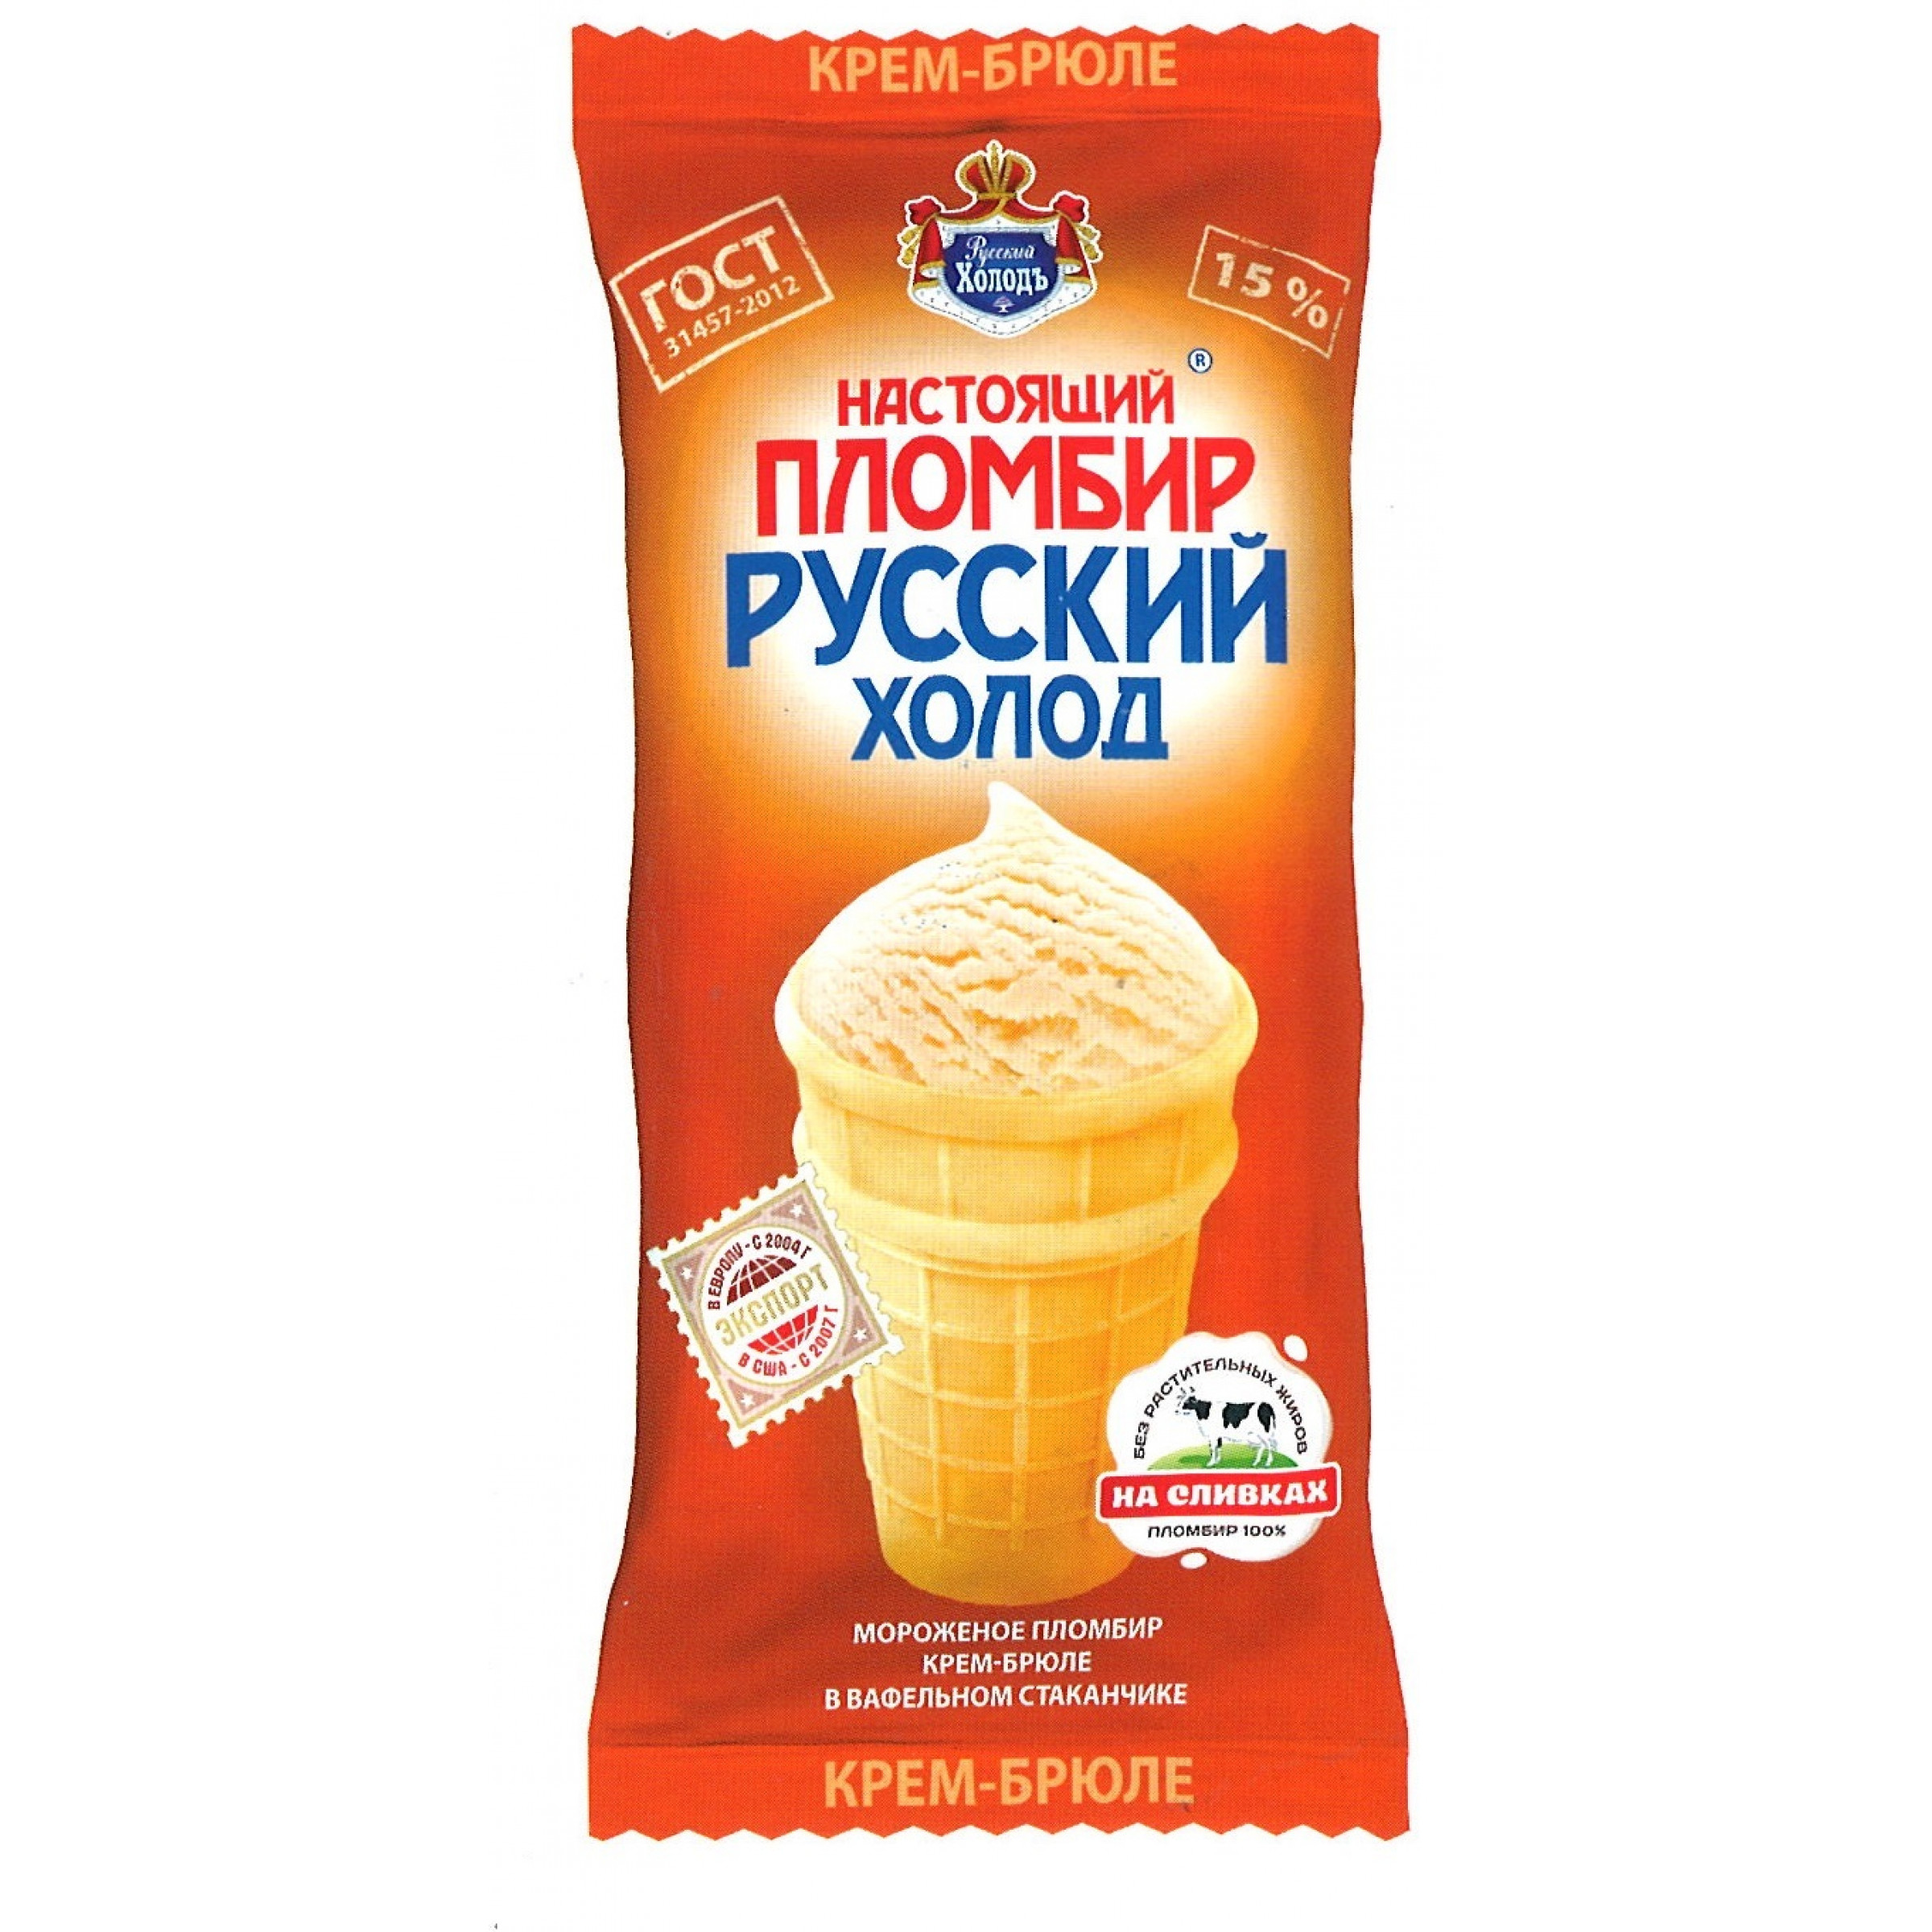 Крем брюле купить. Мороженое настоящий пломбир крем брюле. Русский холод мороженое пломбир 150 гр. Мороженое русский стандарт пломбир150гр. Мороженое русский холод крем брюле 150 гр.